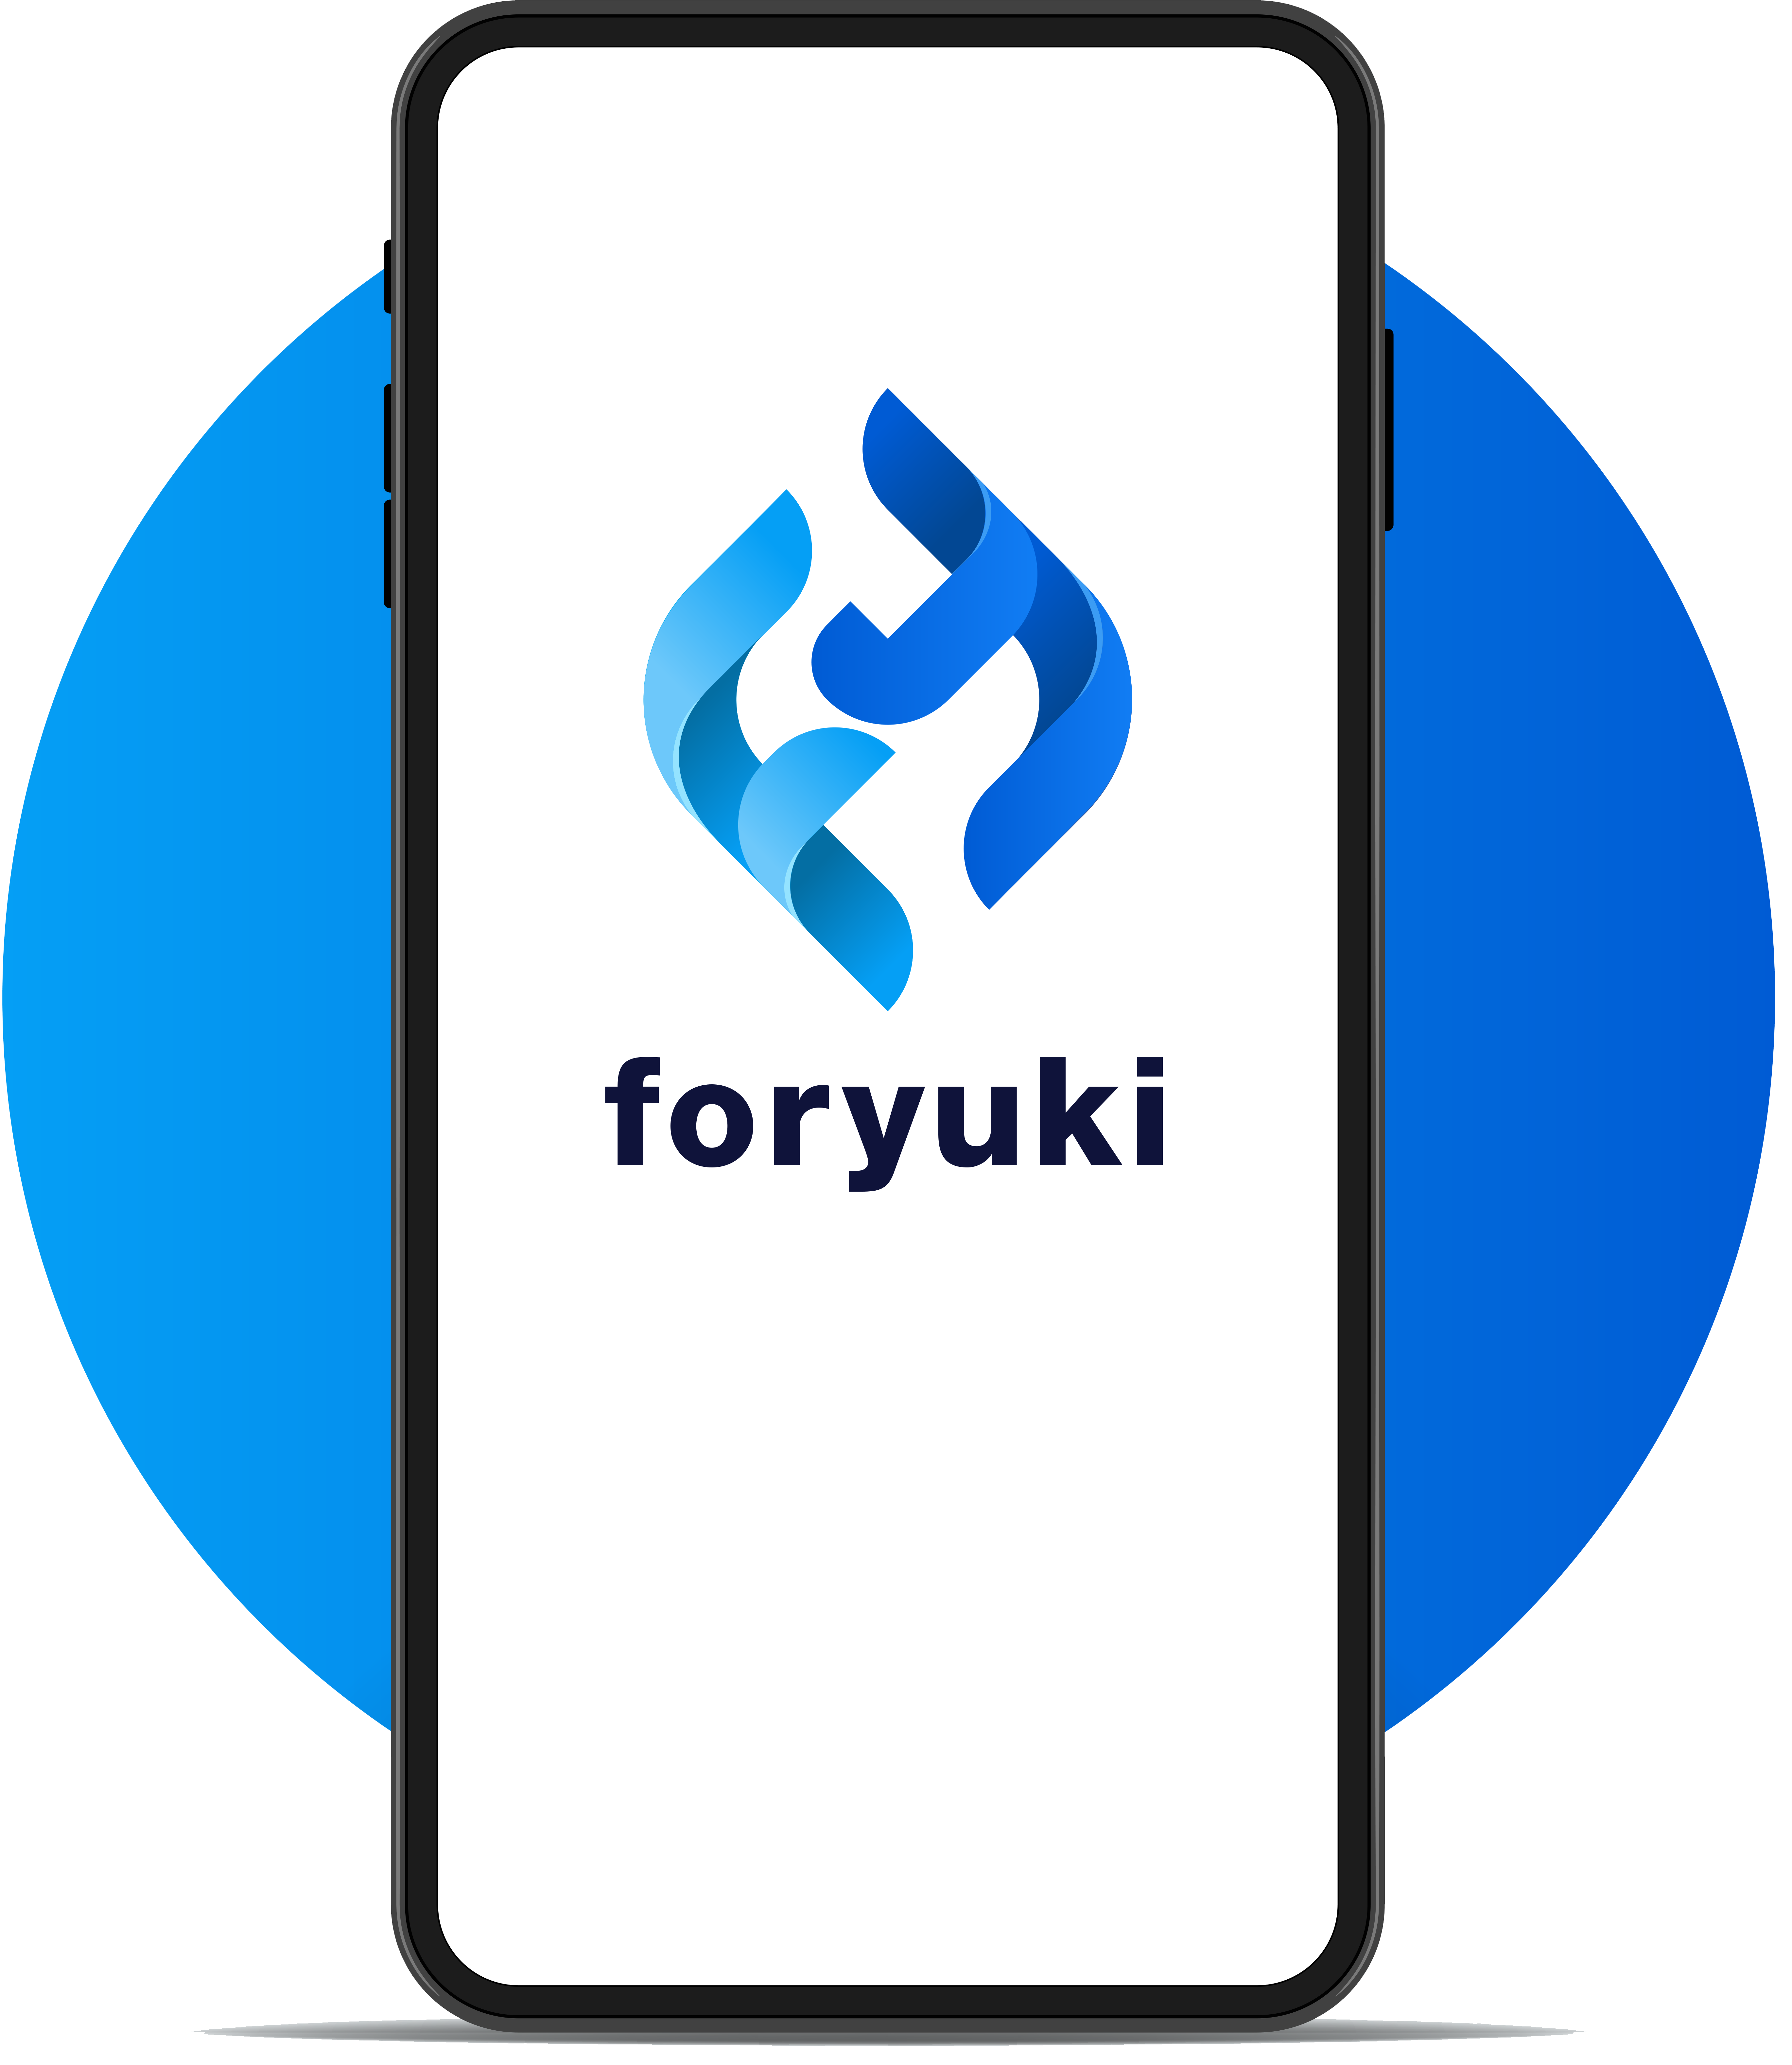 foryuki app image